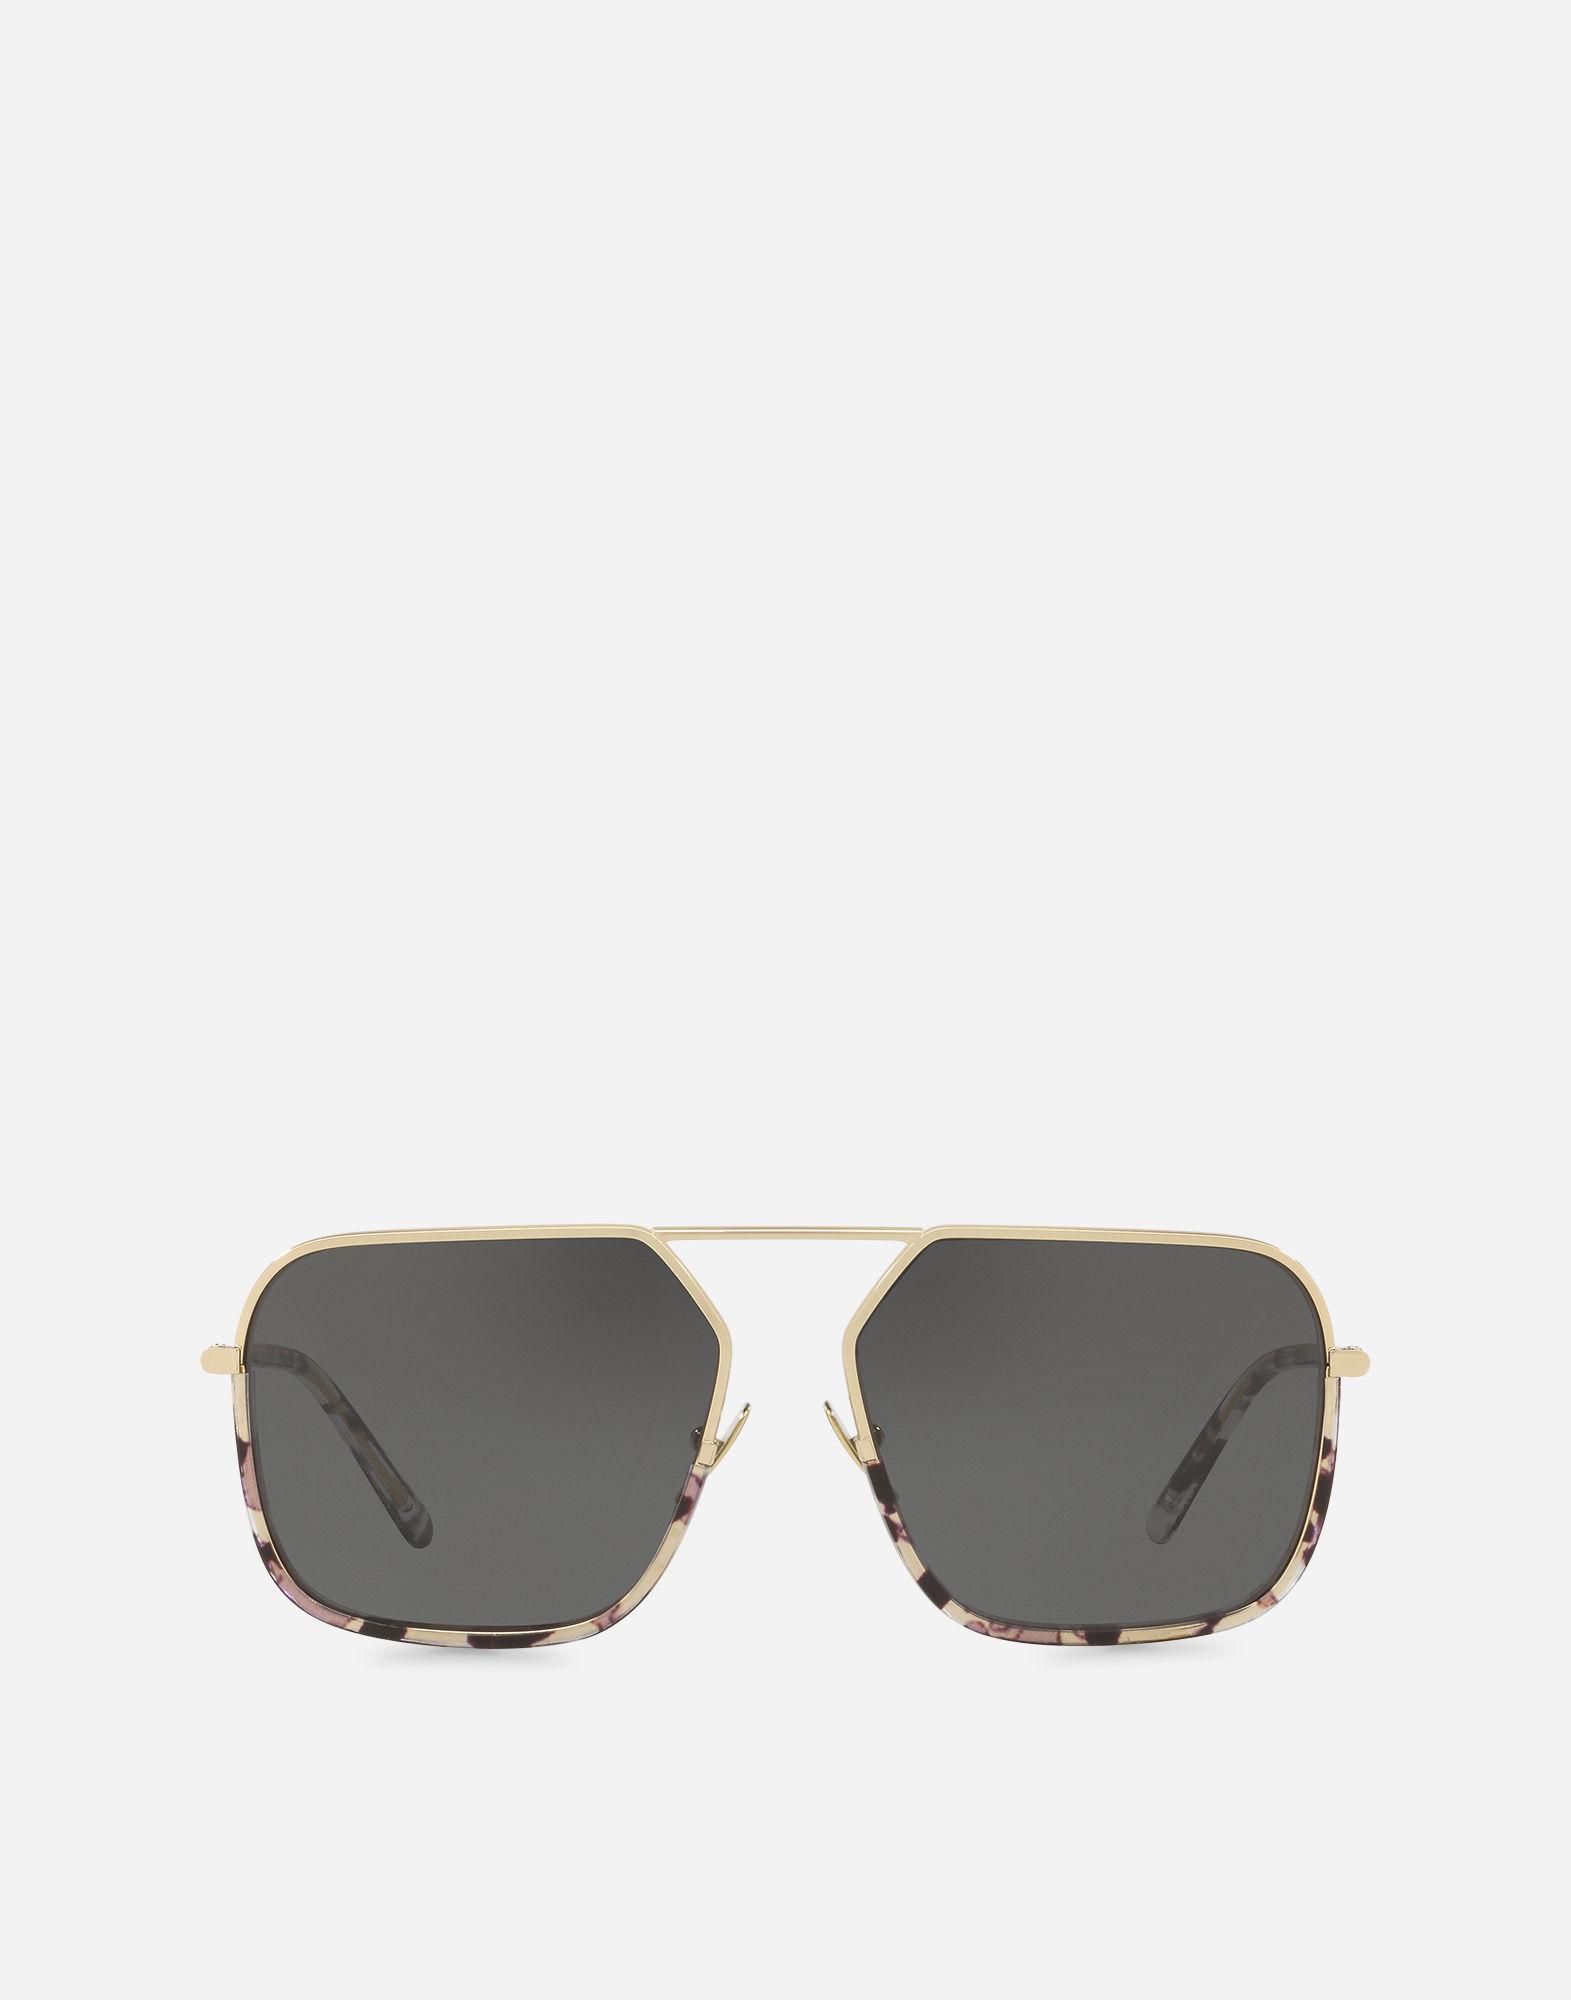 Lyst - Dolce & Gabbana Rectangular Sunglasses With Metal Bridge in ...